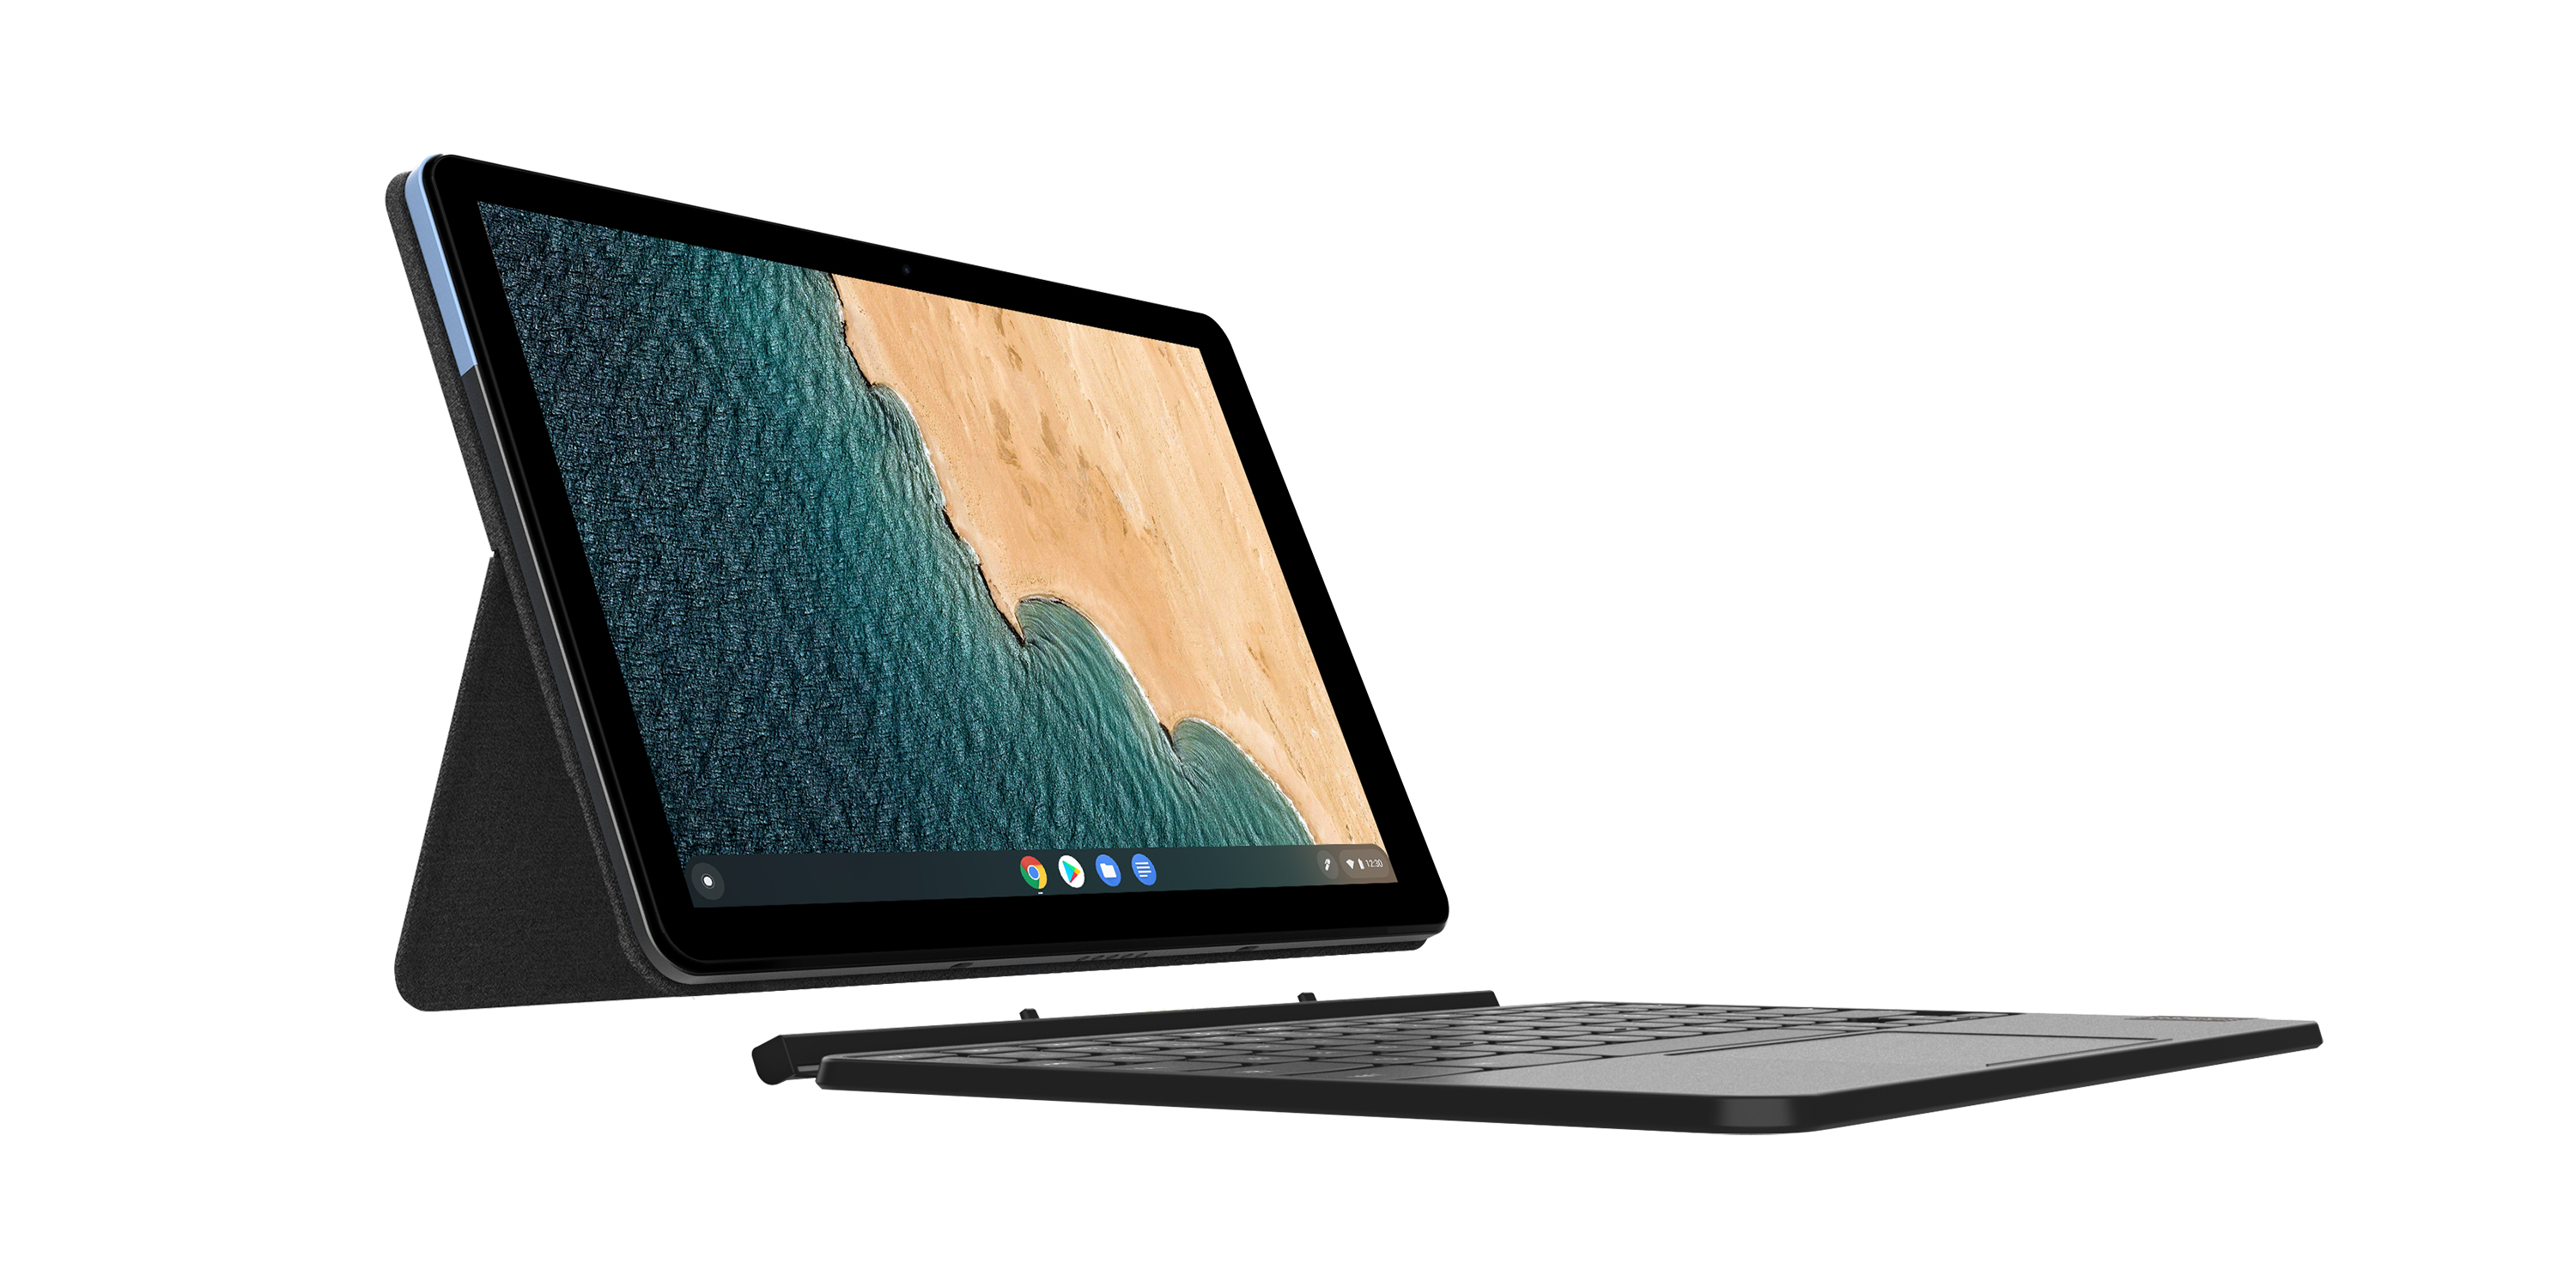 Lenovo IdeaPad Duet Chromebook looks like a good tablet - 9to5Google